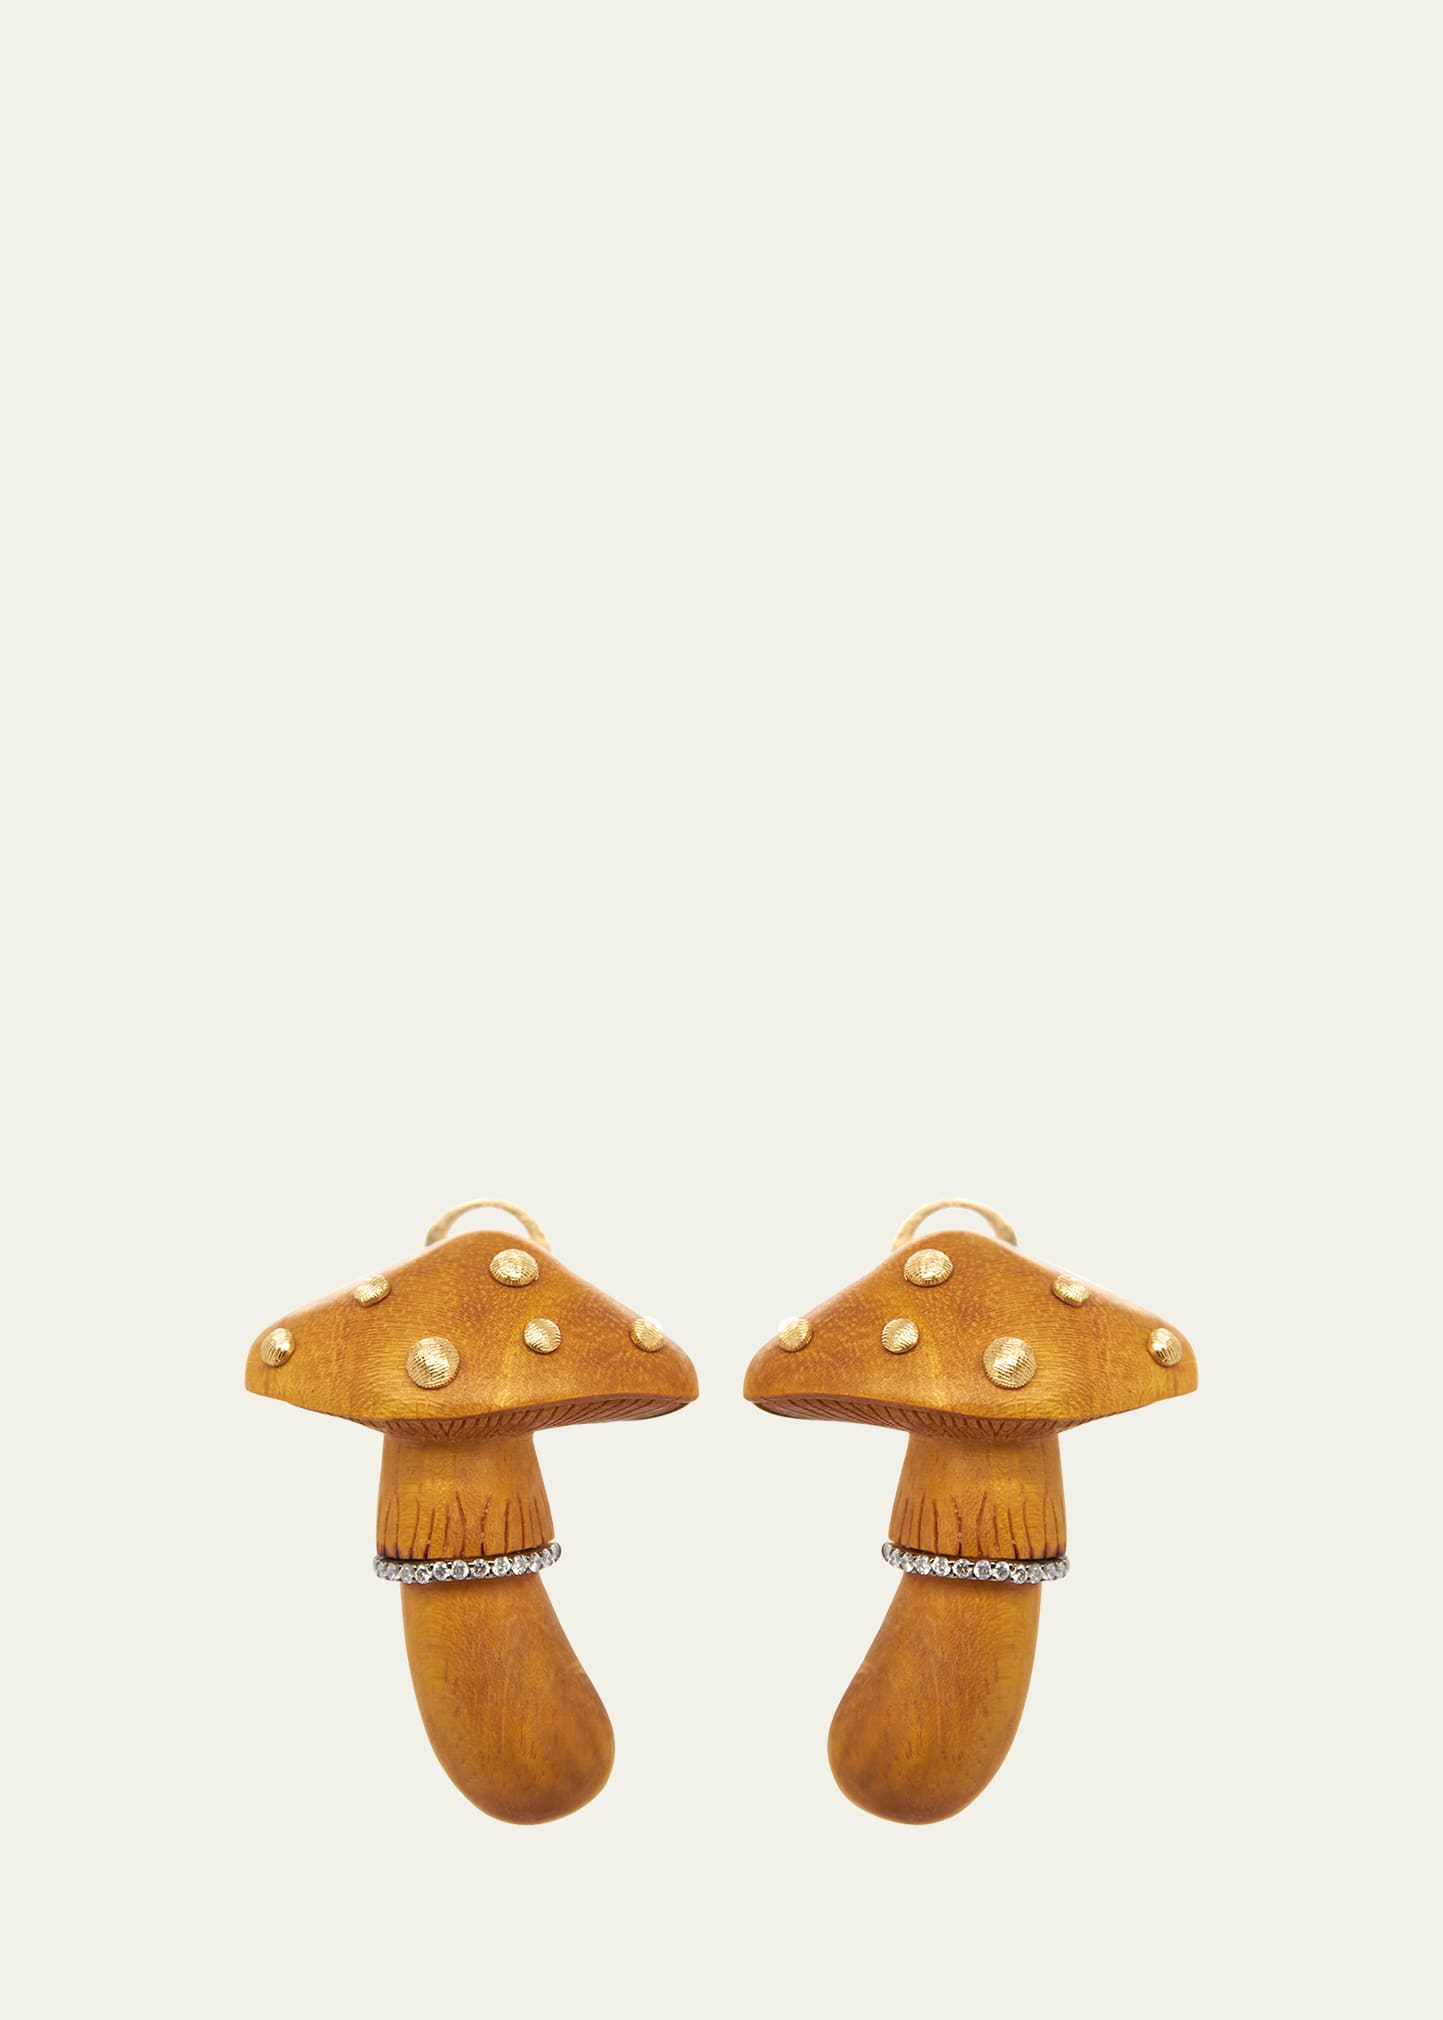 Carved Wood Mushroom Earrings with Diamonds